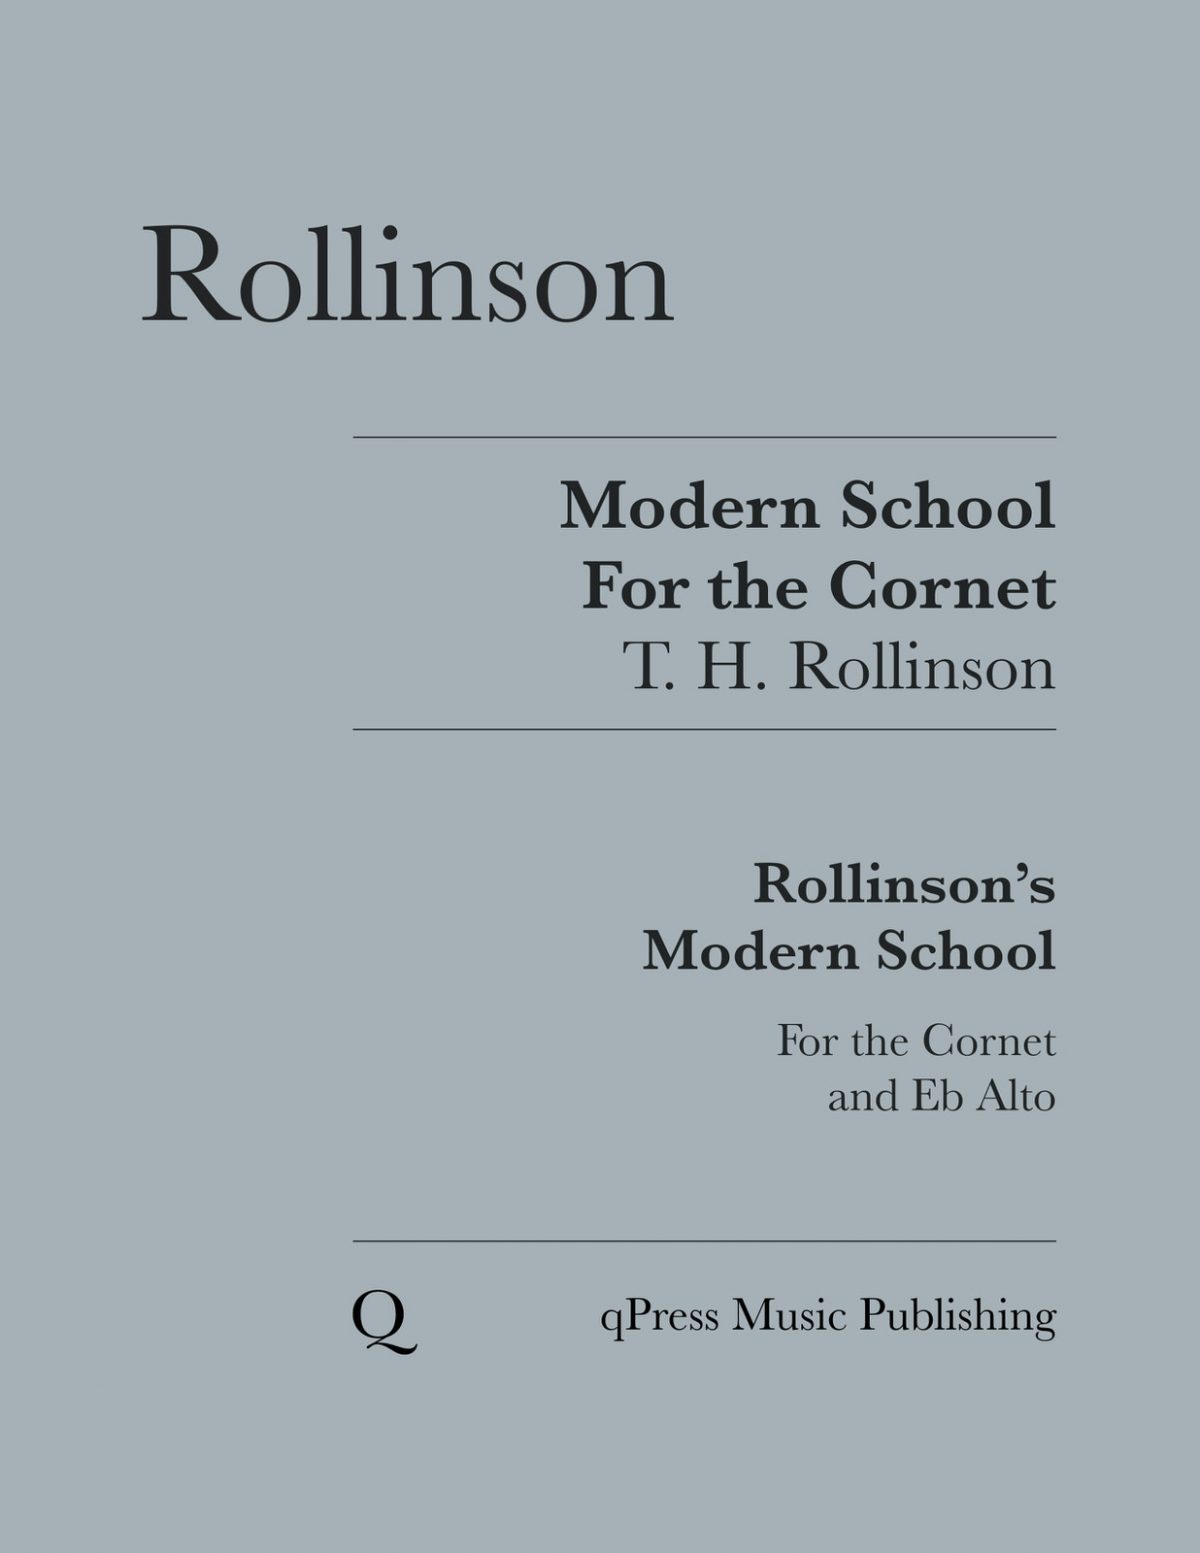 Modern school cover